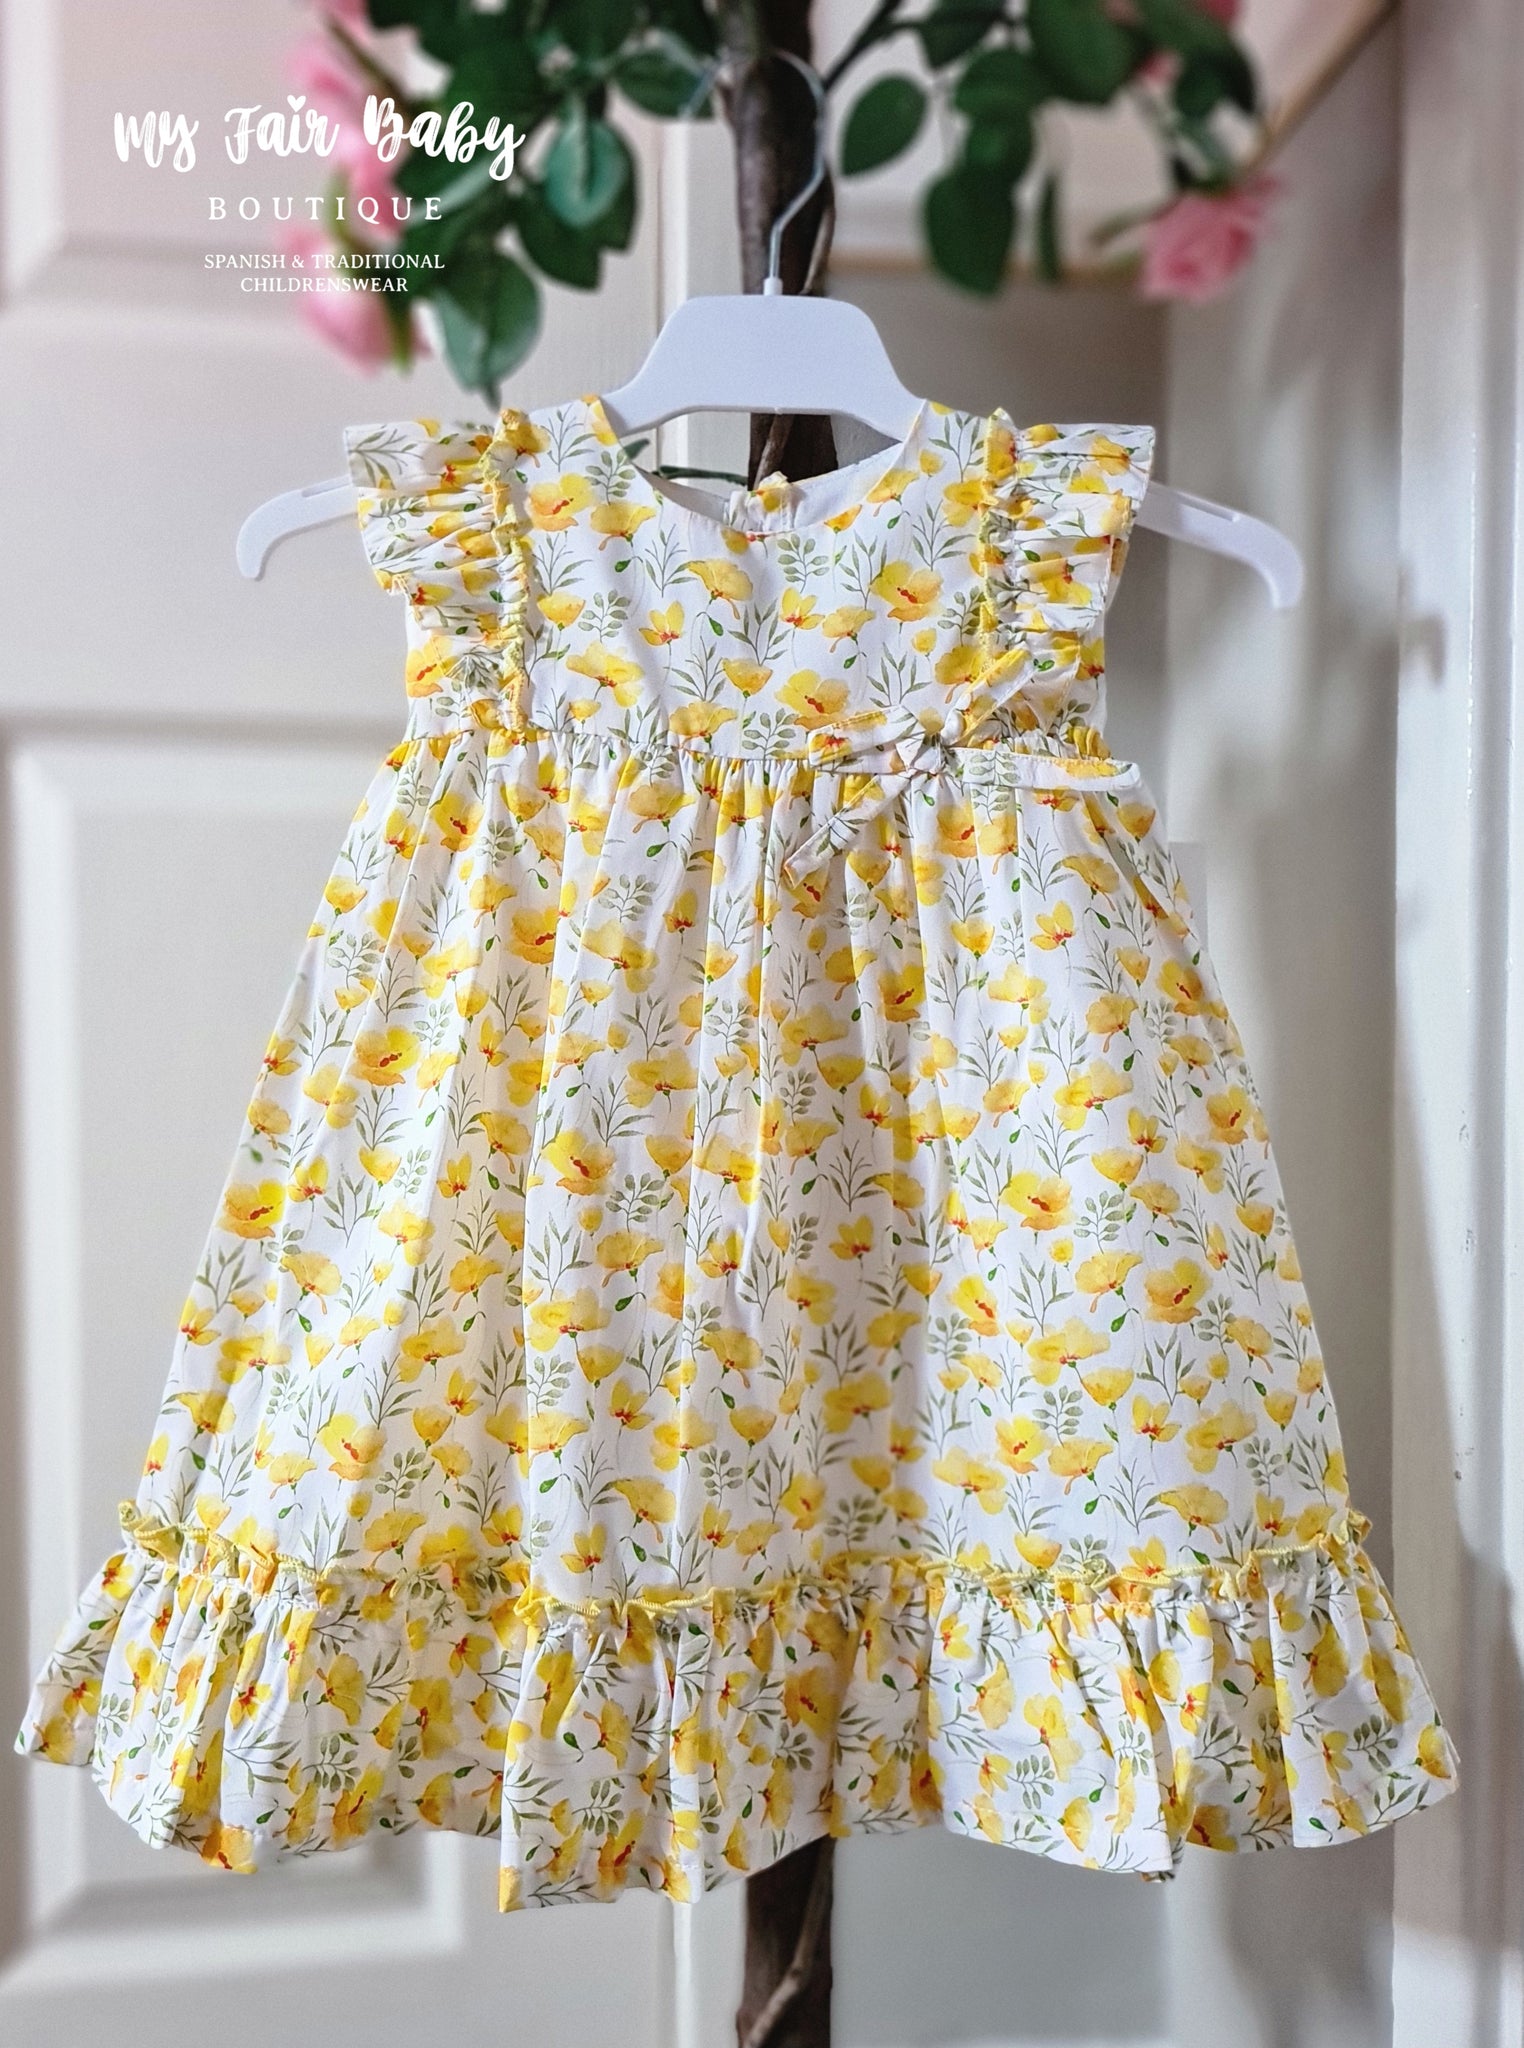 Spanish BabyFerr Older Girls Yellow Poppies Dress 24568 - 2-10y